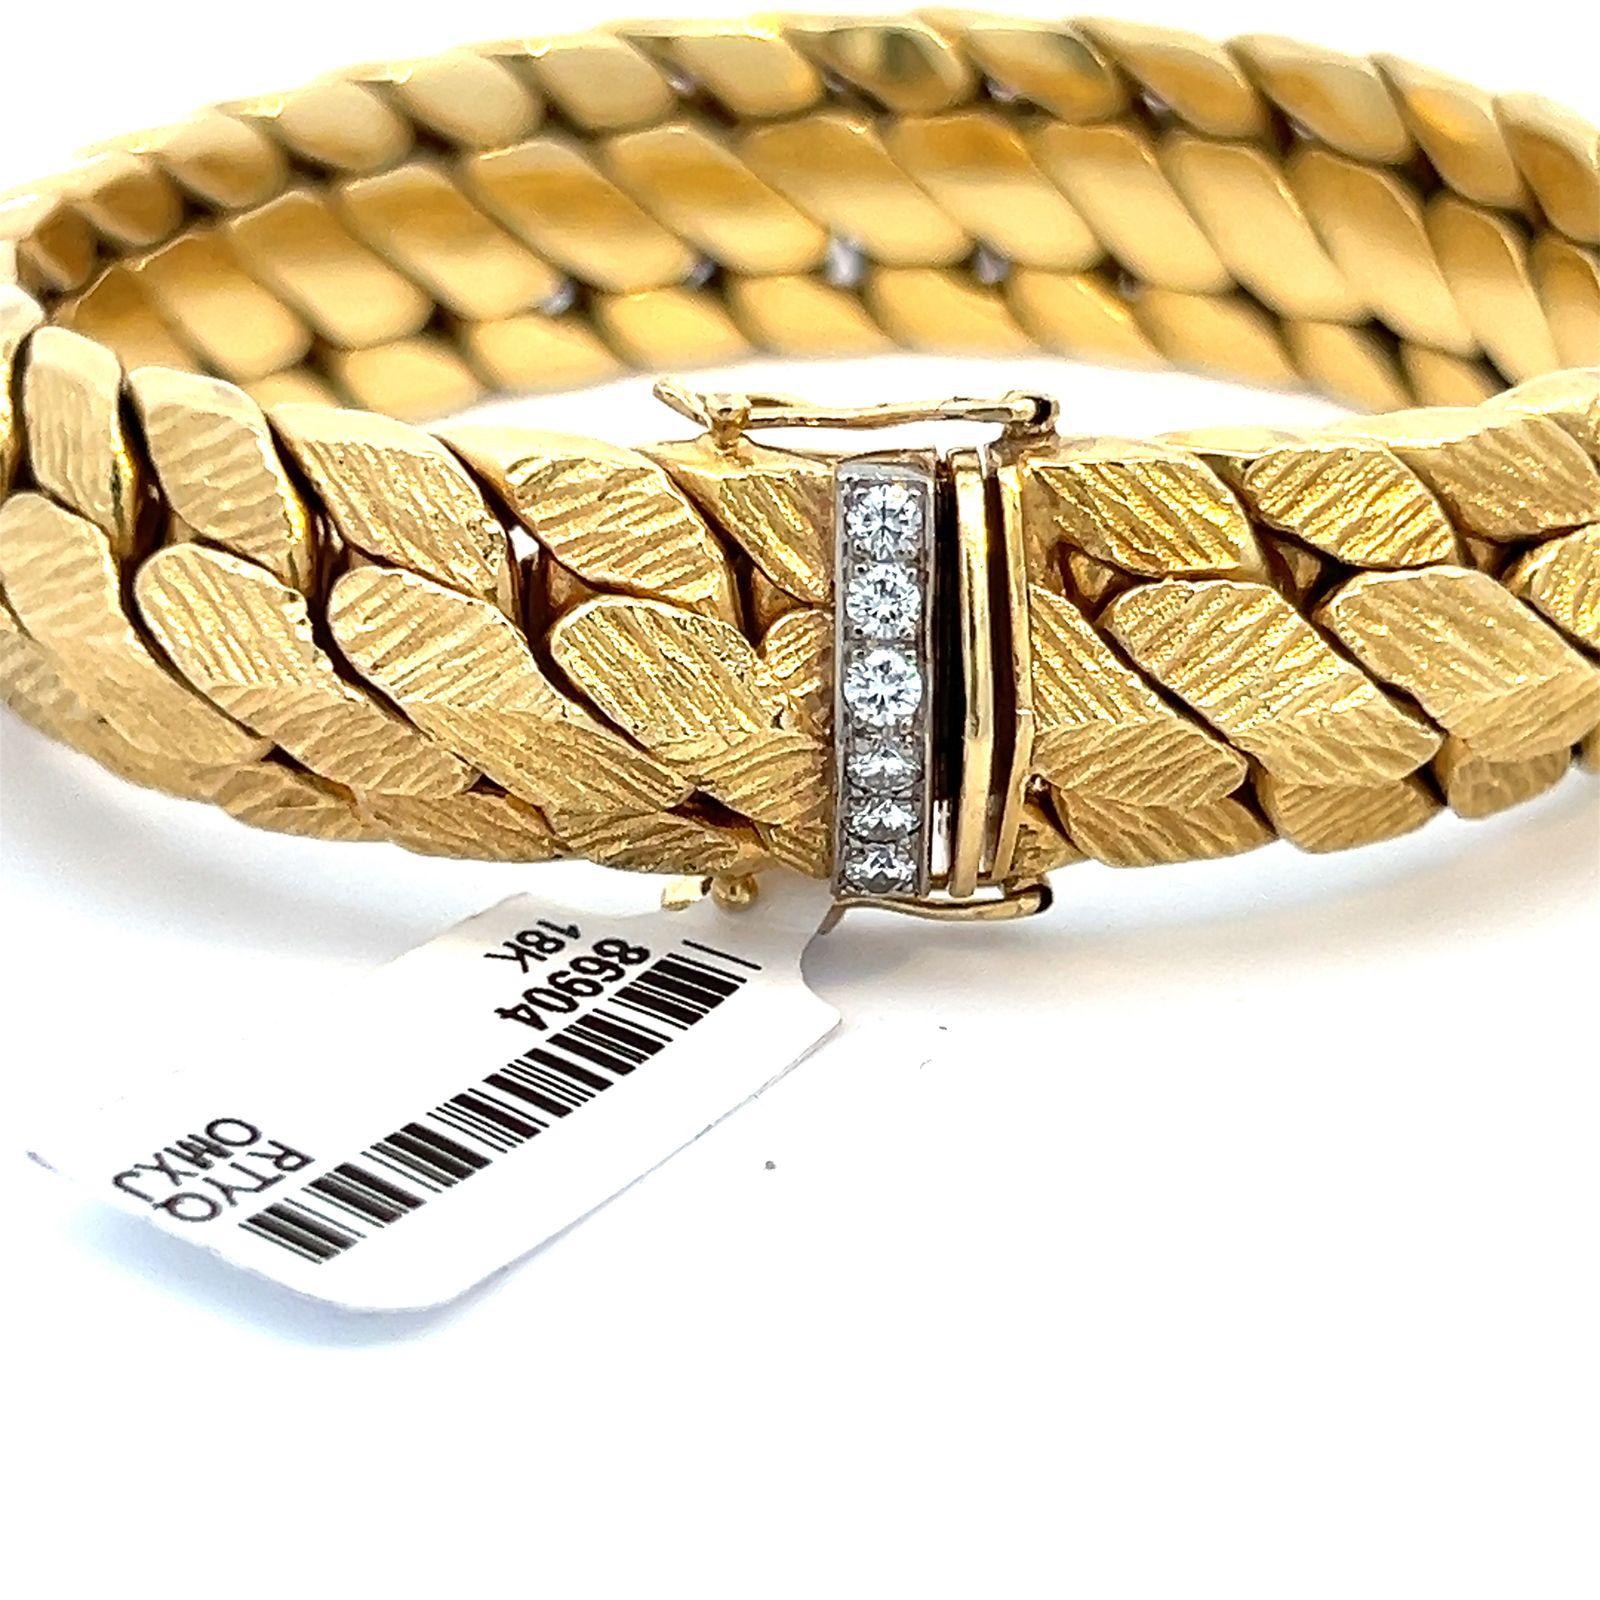 Retro estate 18 karat Yellow Gold Woven Florentine chain-link bracelet with diamond clasp. The bracelet is 18 karat solid yellow gold weighing 88.1 grams. The white gold clasp has six bezel set diamonds totaling 0.25 carats The bracelet is 0.25